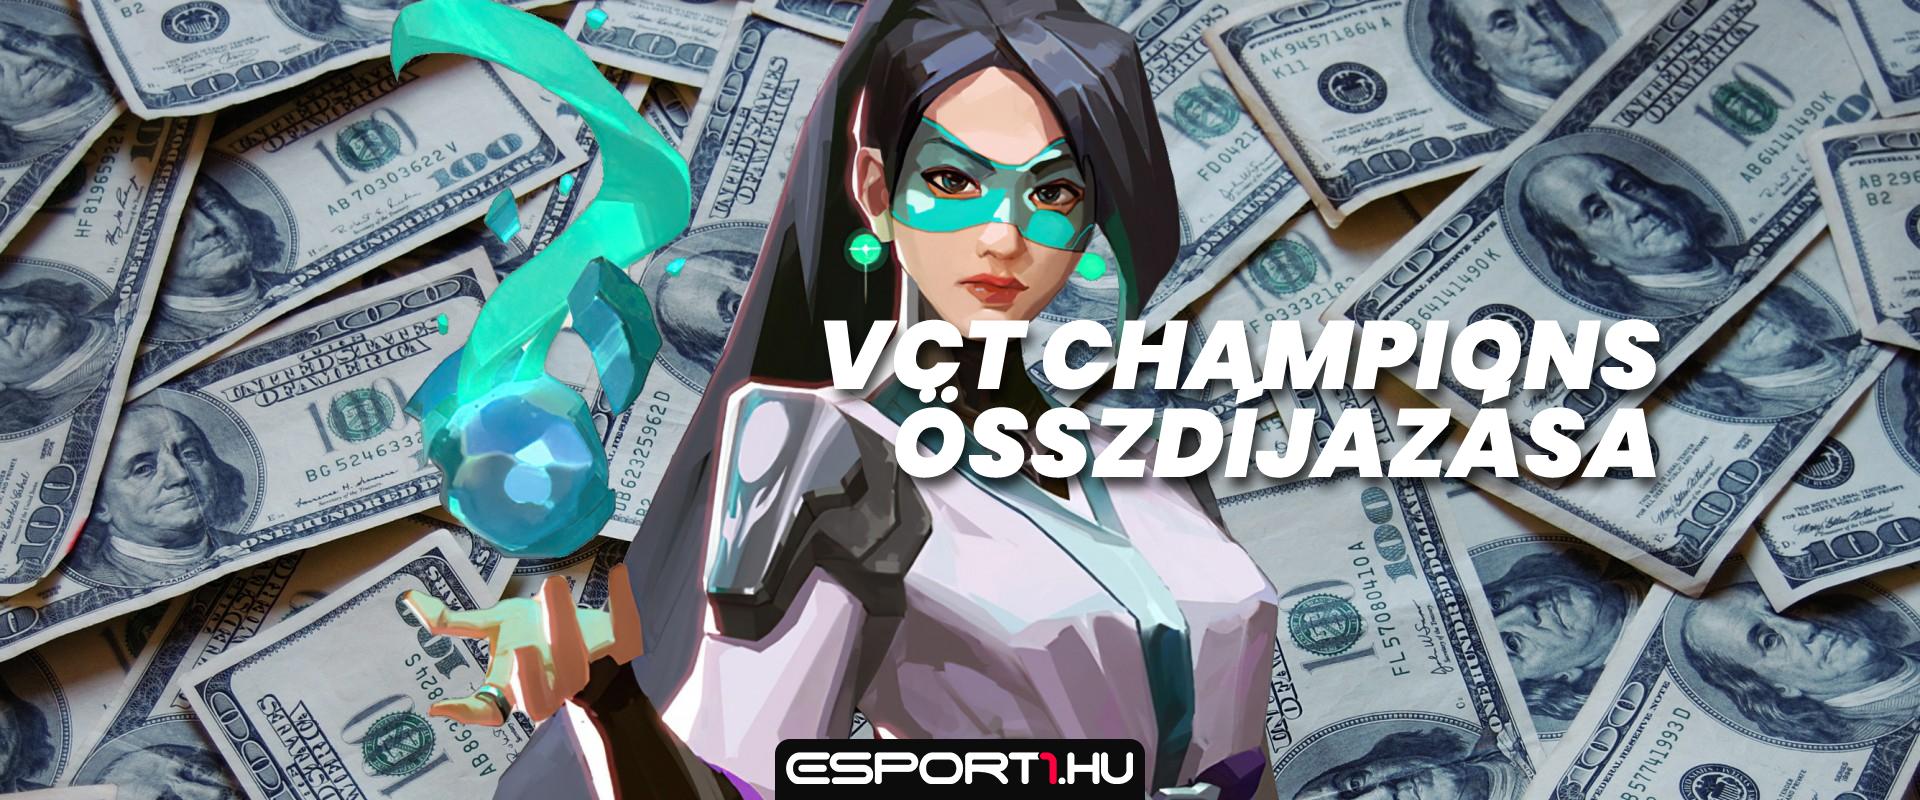 VCT Champions nyeremények, mennyi is az annyi?